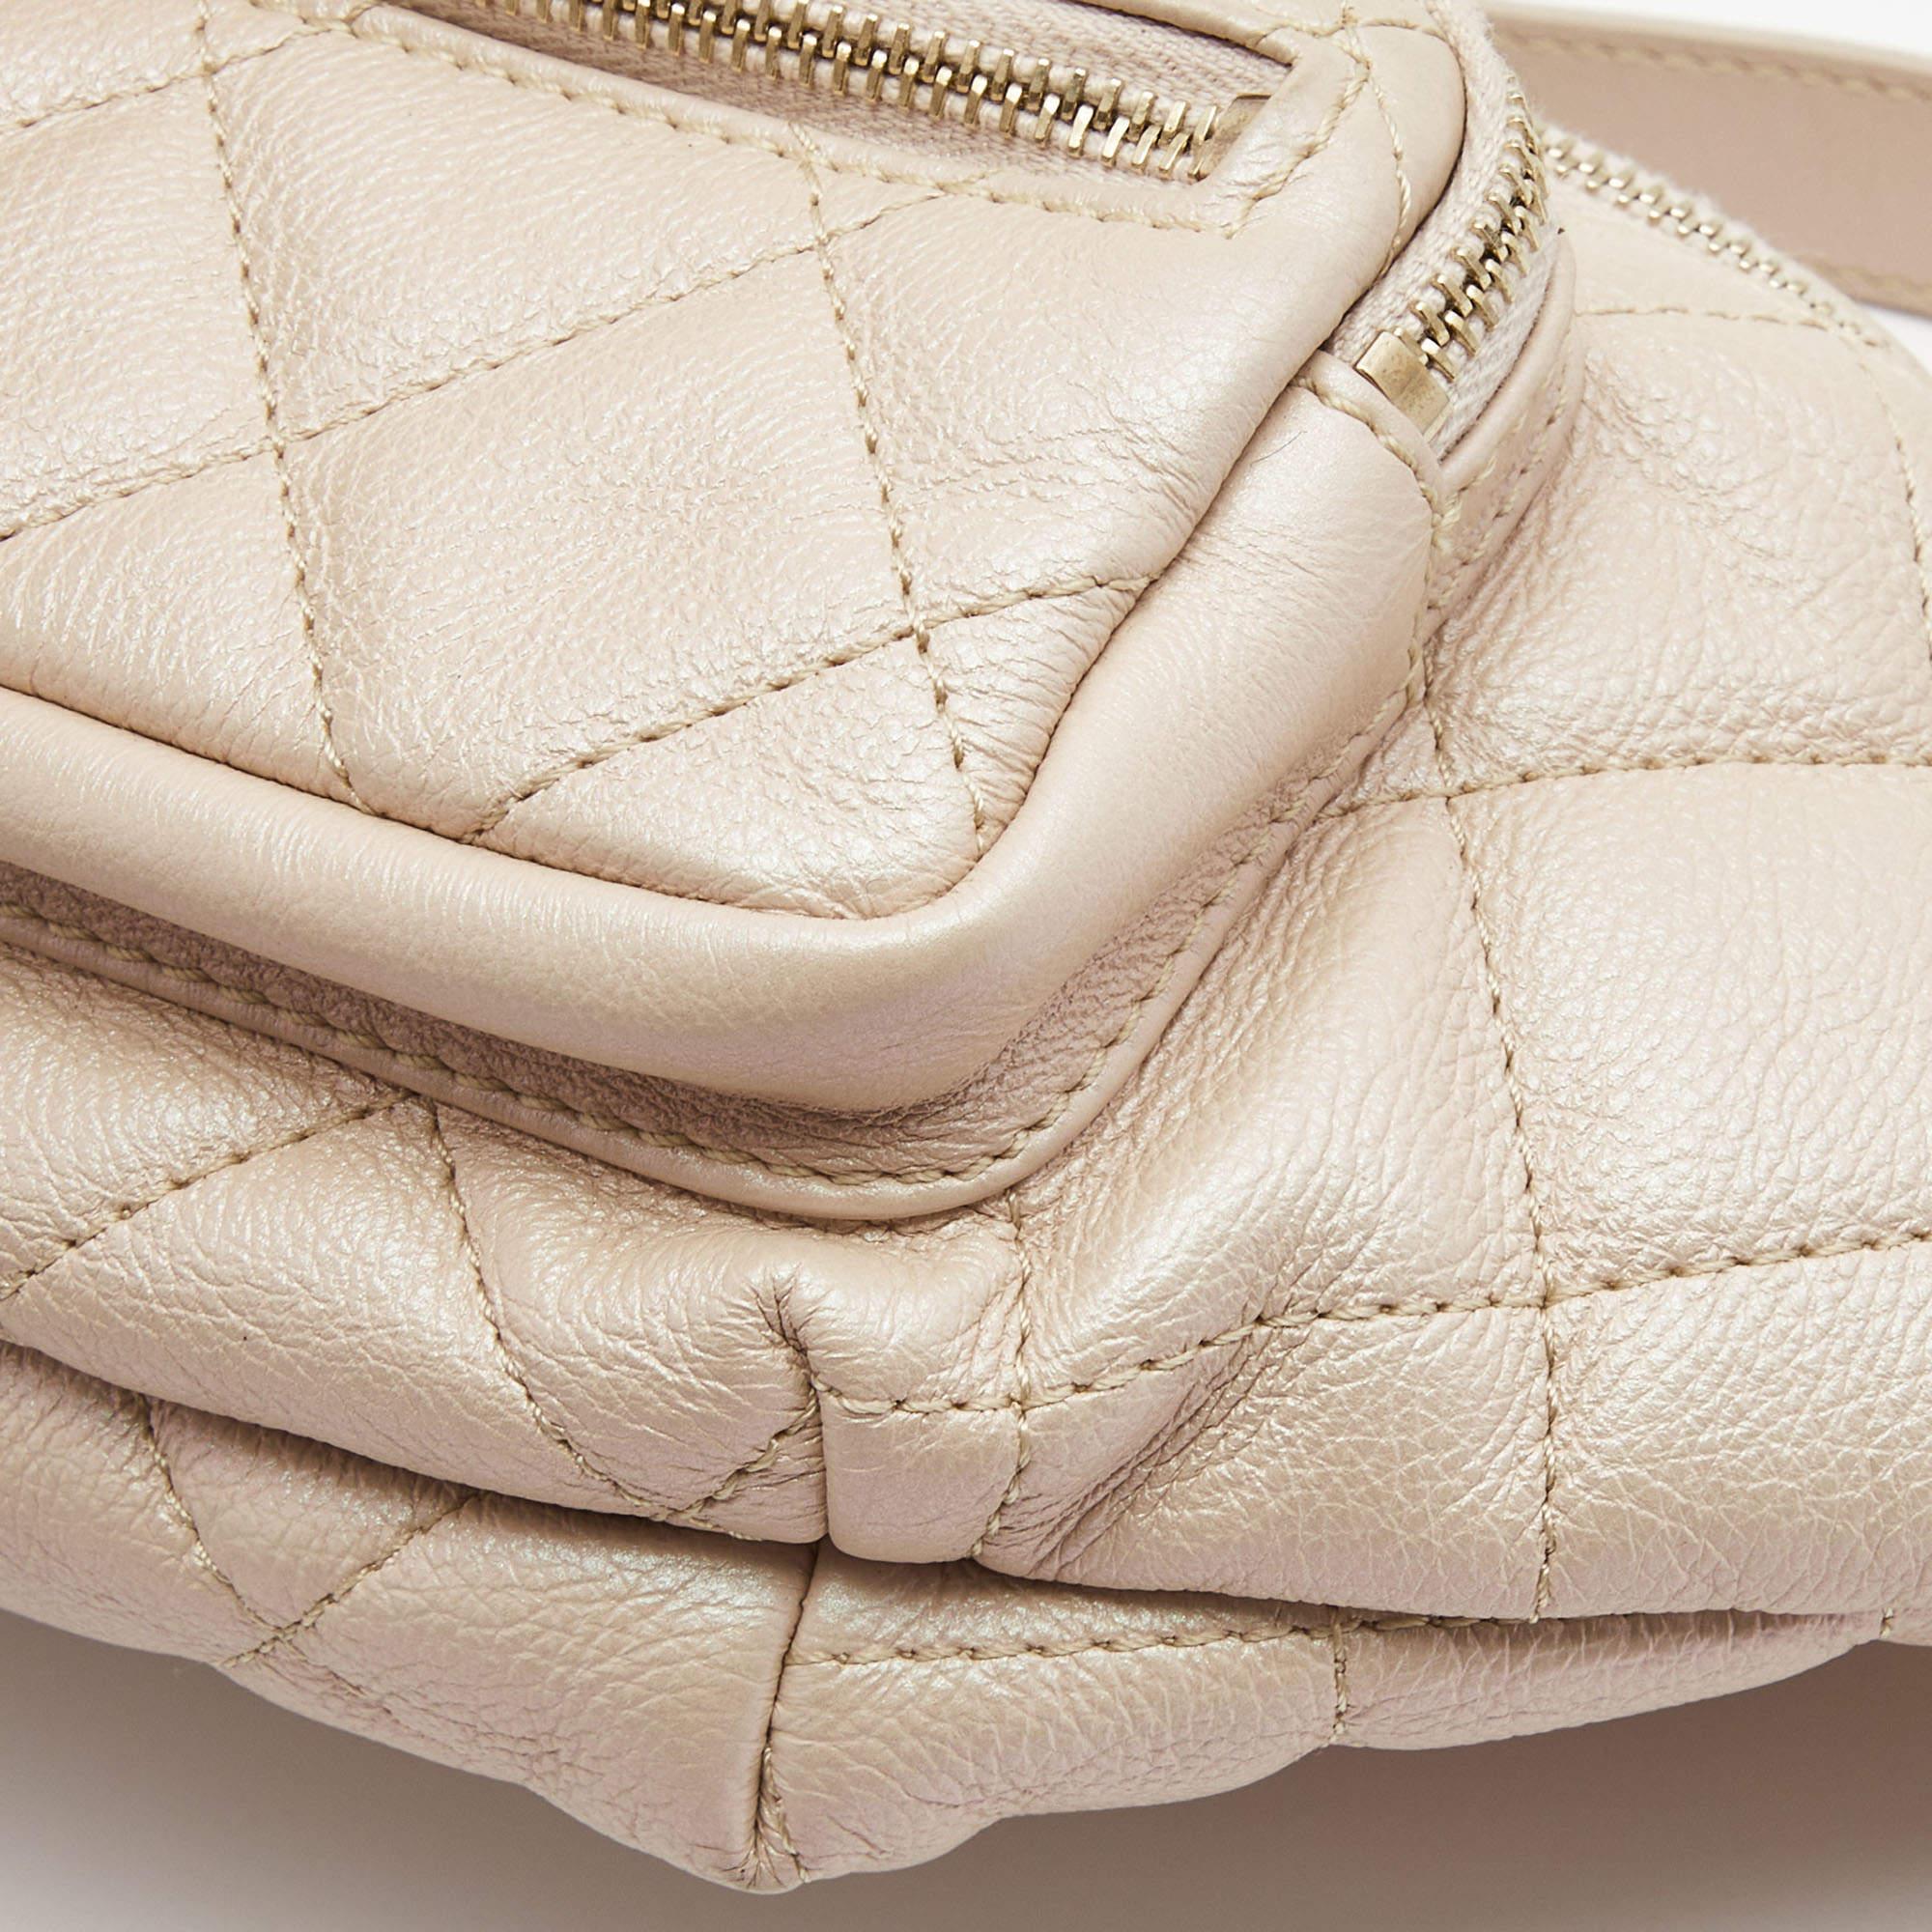 Chanel Beige Quilted Shimmer Leather Fanny Pack Waistbelt Bag 2